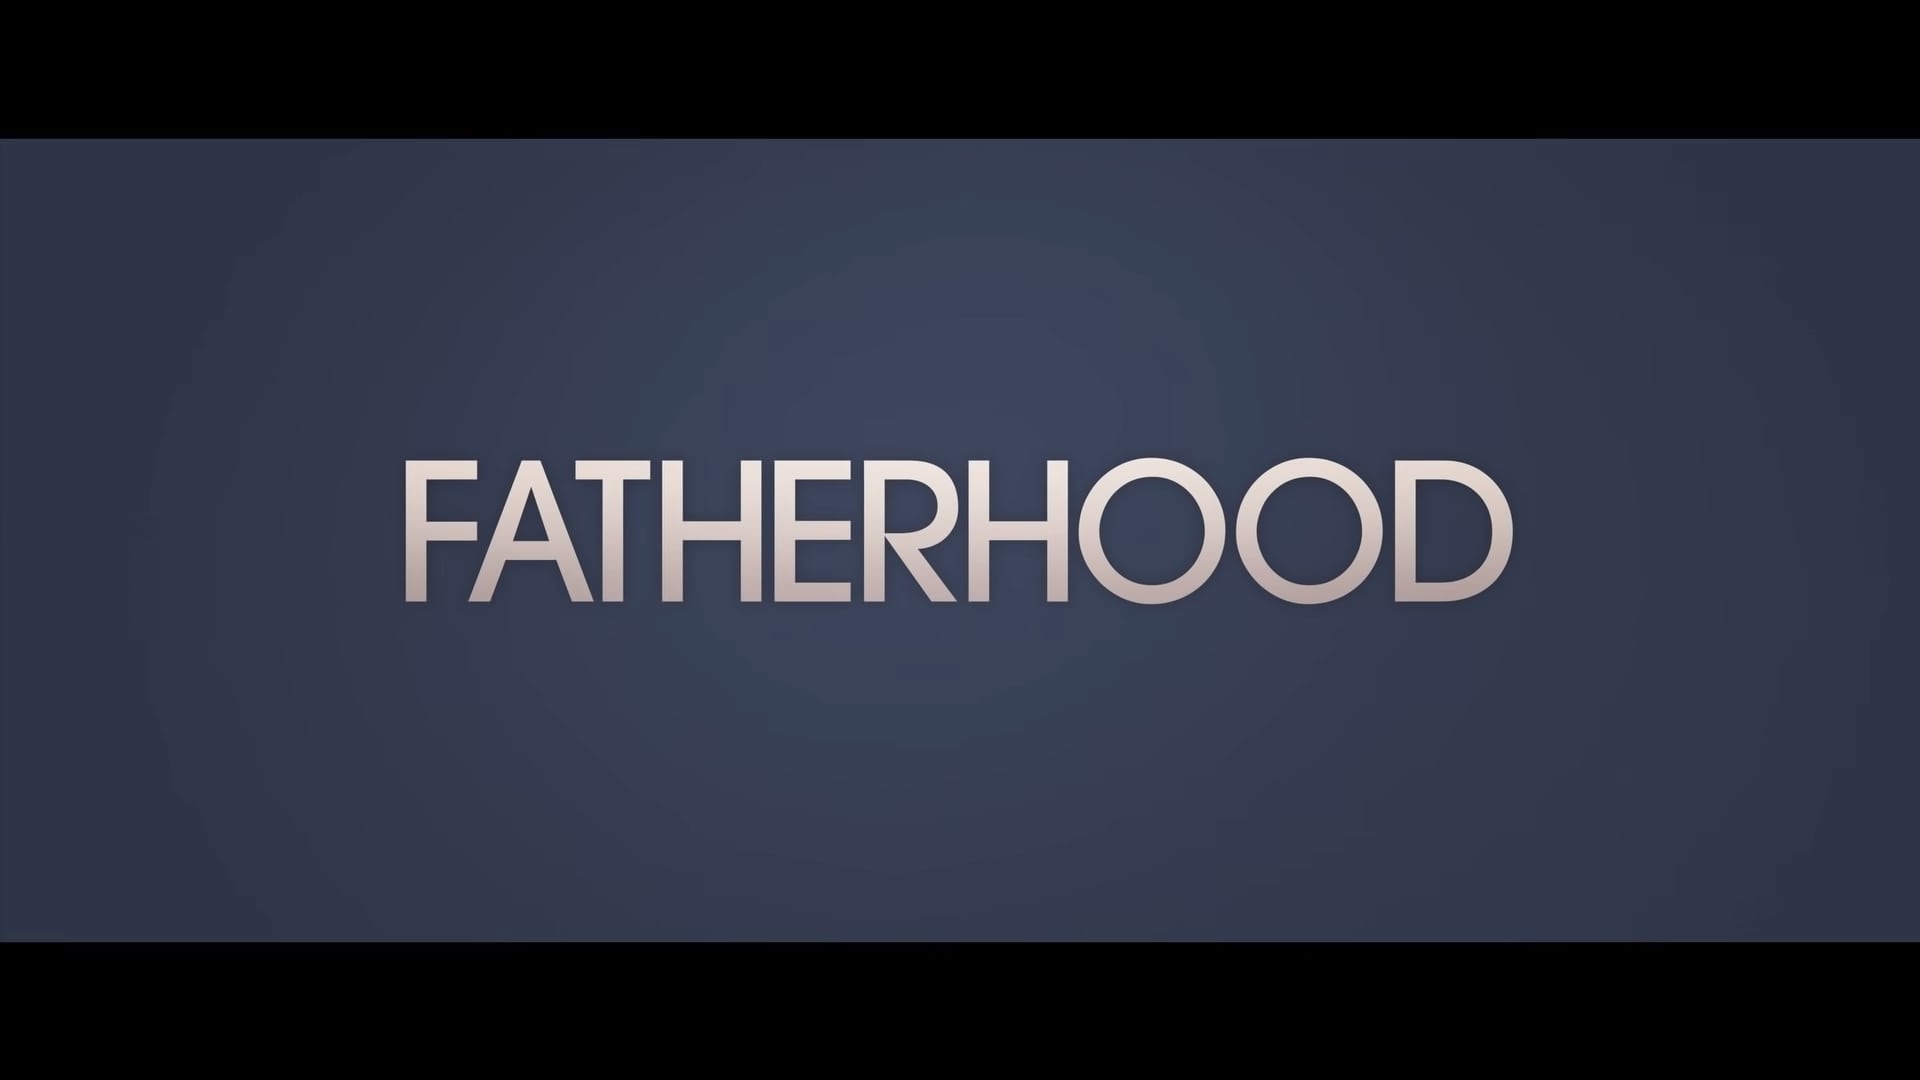 Netflix Fatherhood Official Trailer, Coming to Netflix in June 2021